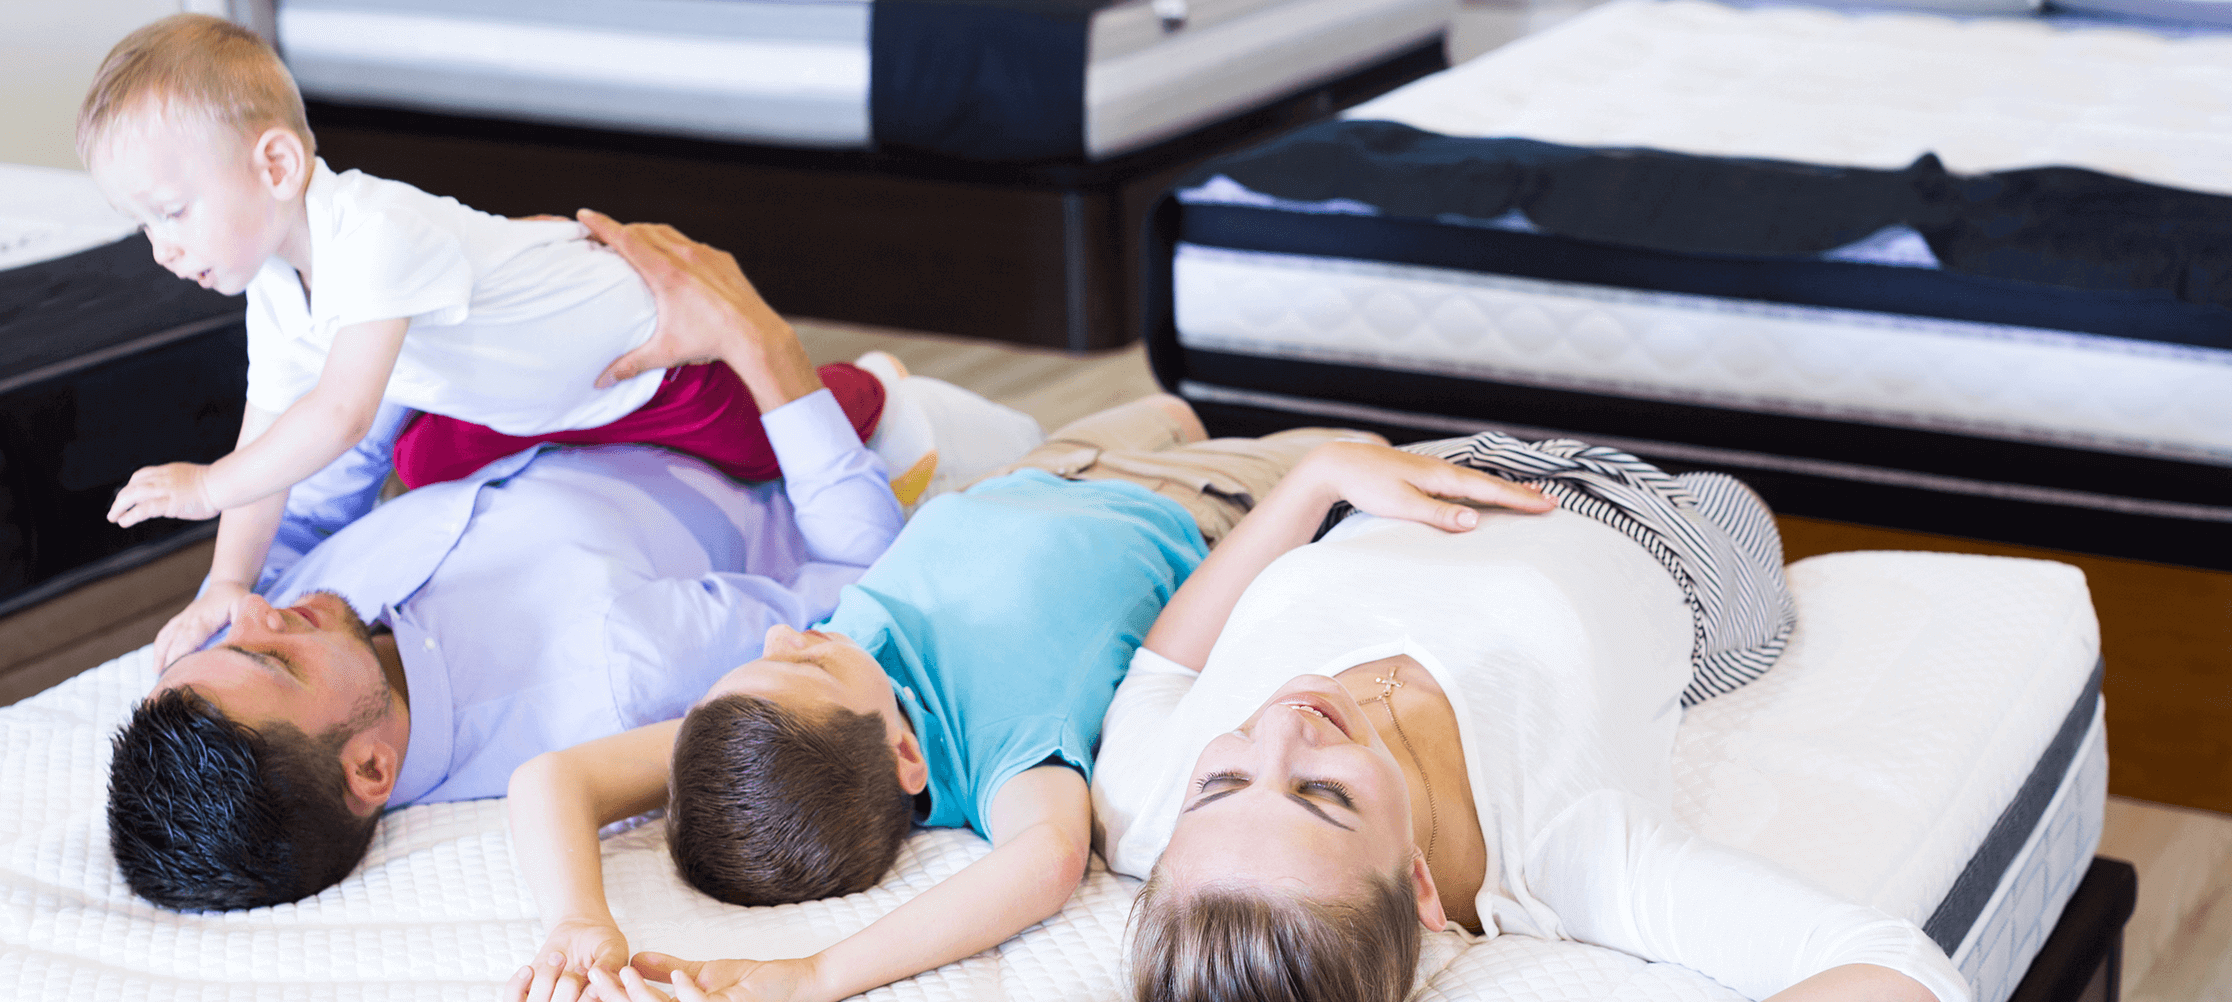 best mattresses for kids - family on mattress